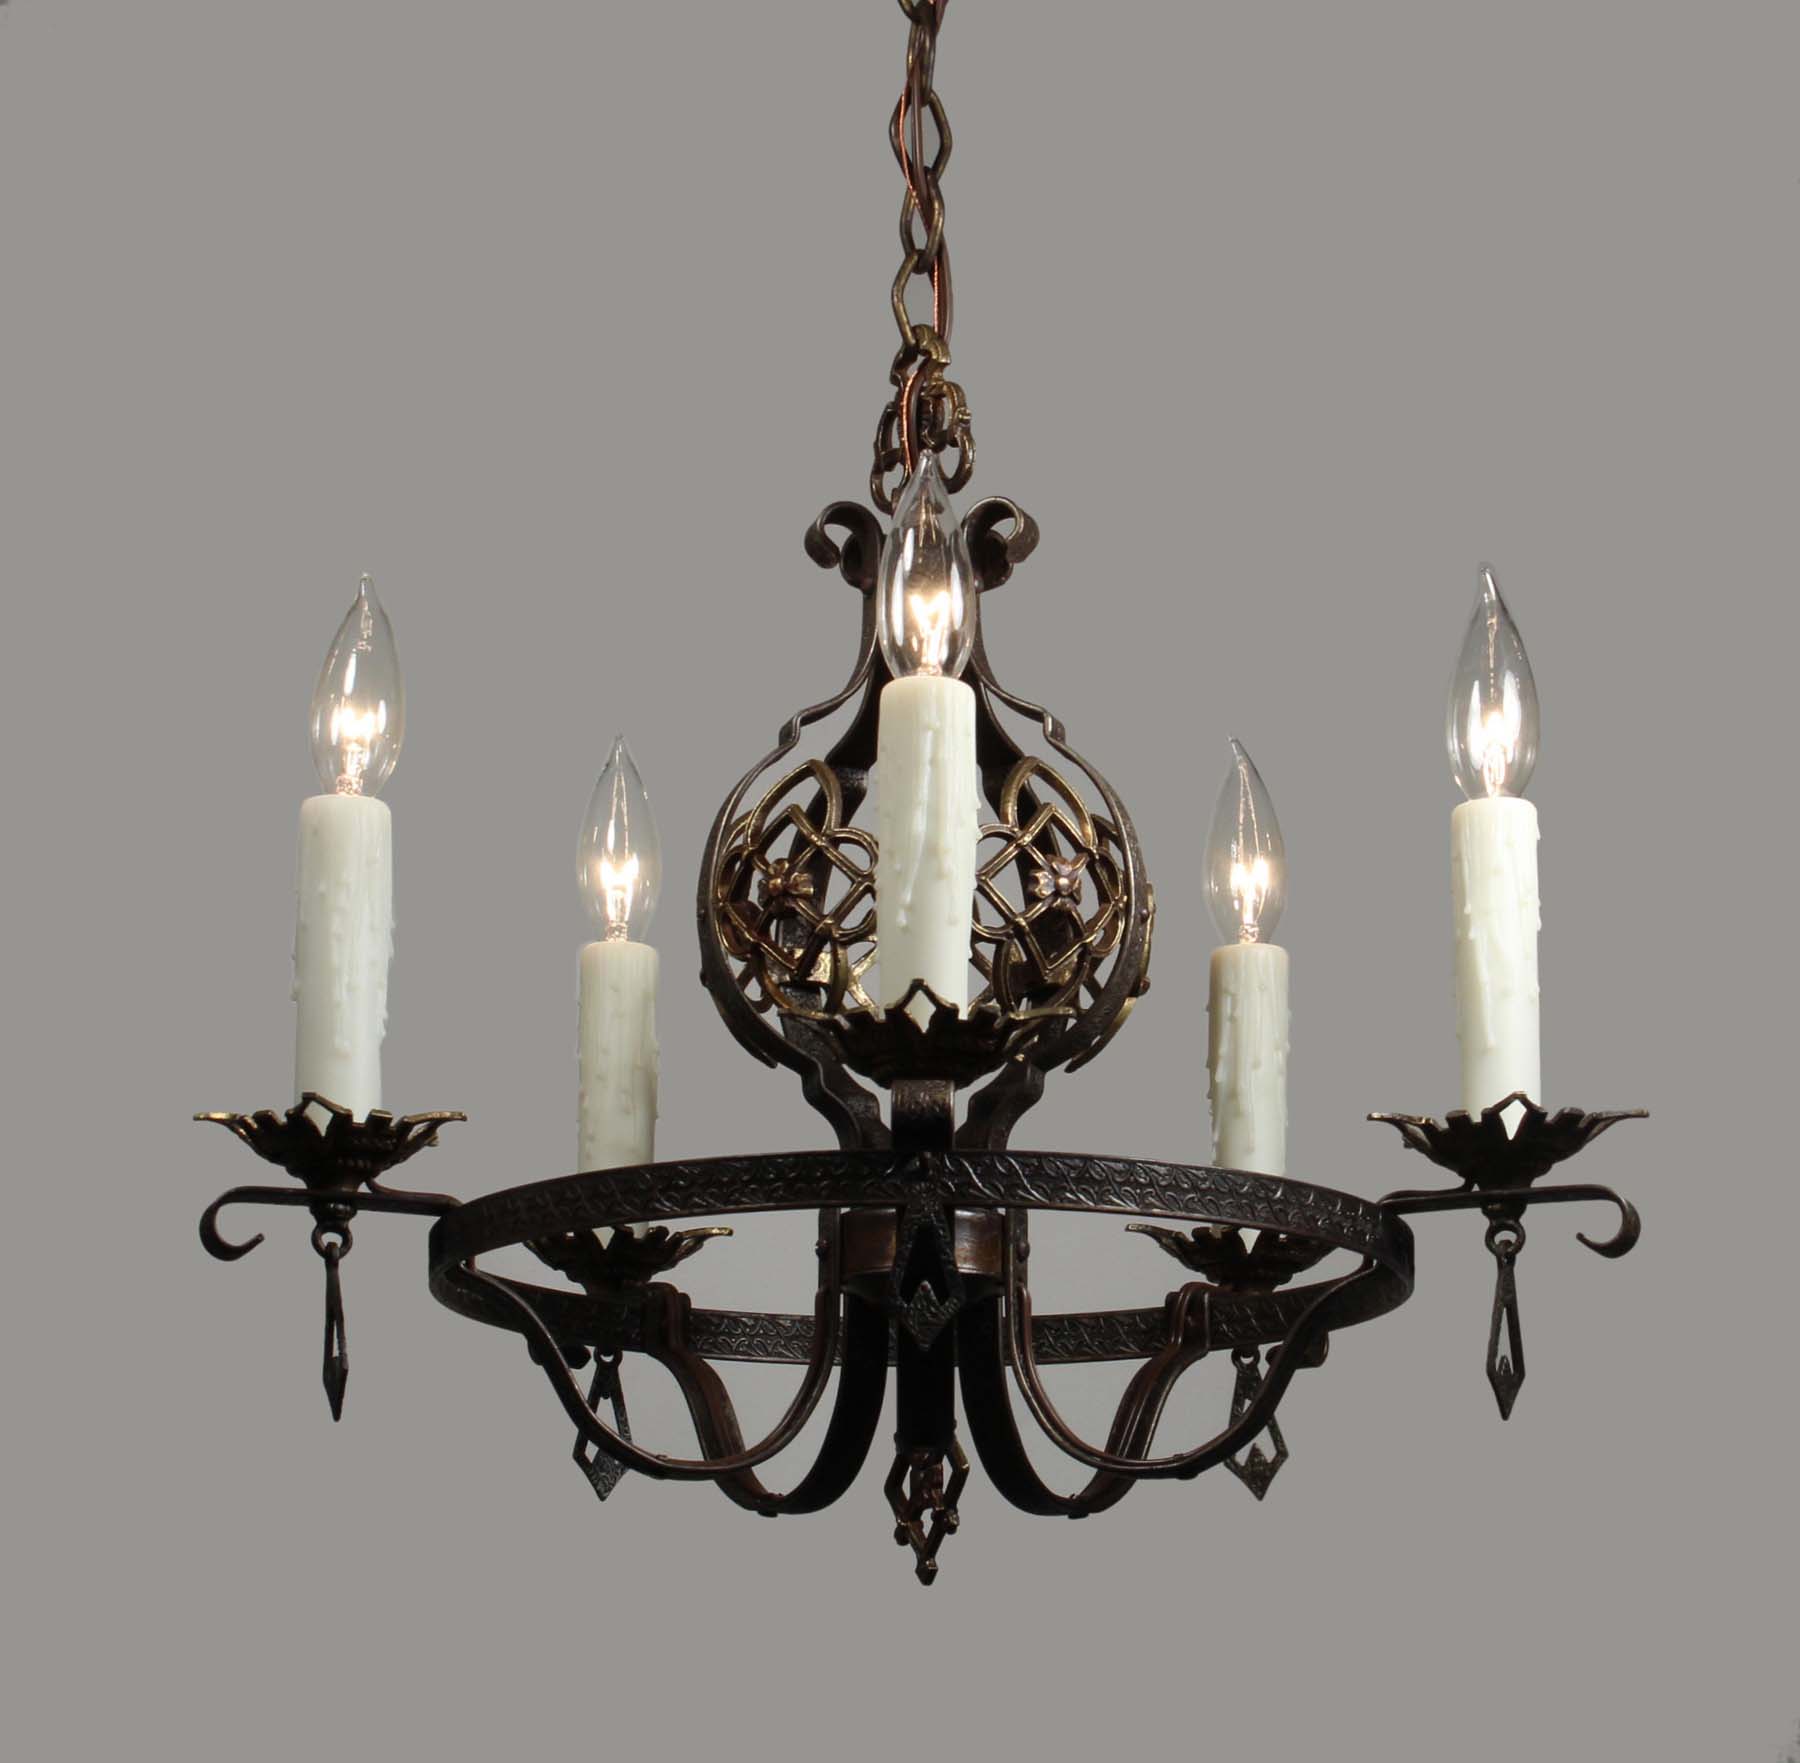 SOLD Spanish Revival Chandelier, Antique Lighting-68296